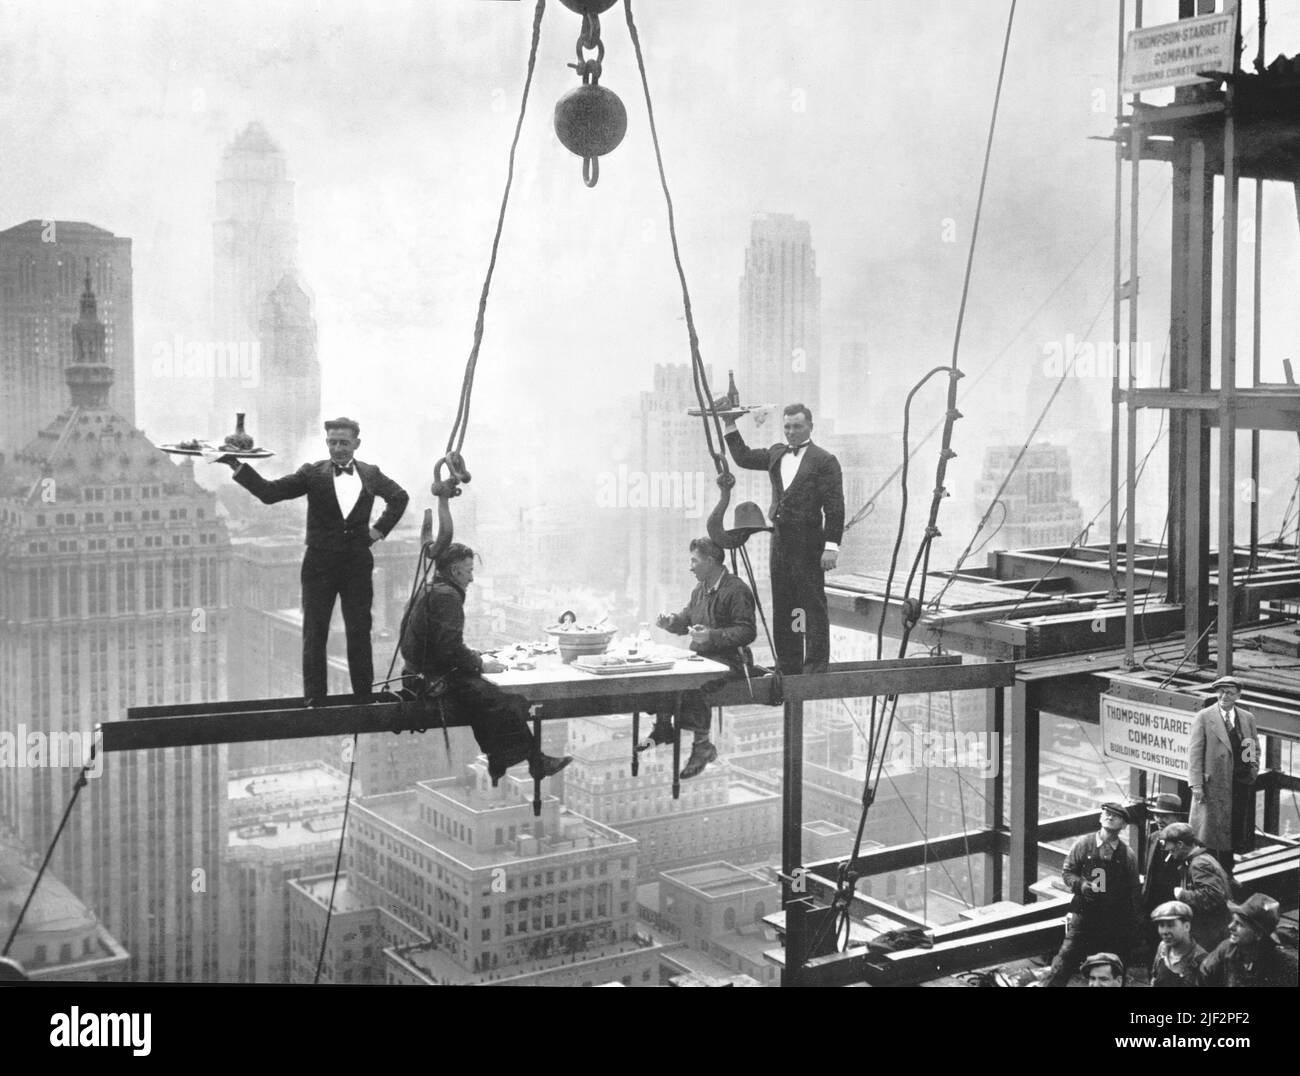 Waldorf Astoria construction, iconic photography, New York City, USA - c1930 Stock Photo